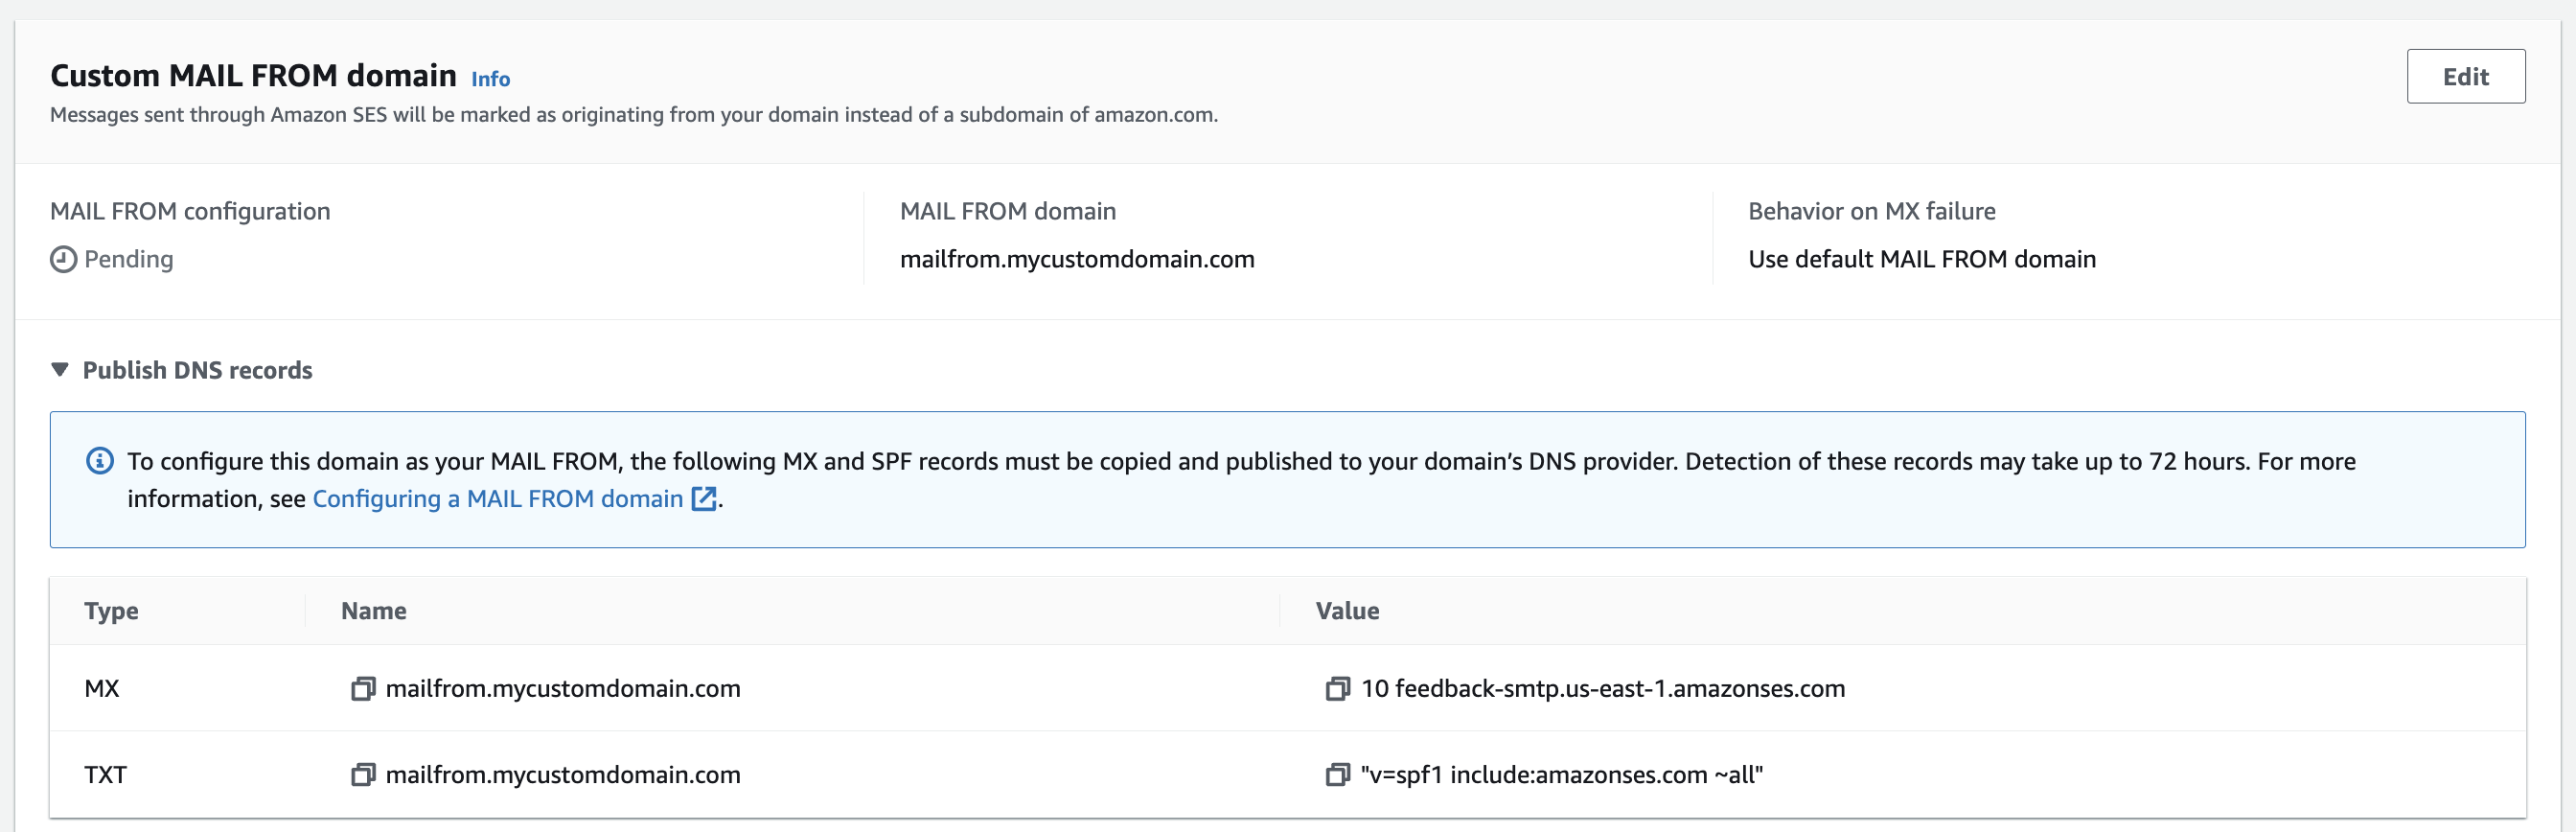 Amazon SES Custom Mailfrom